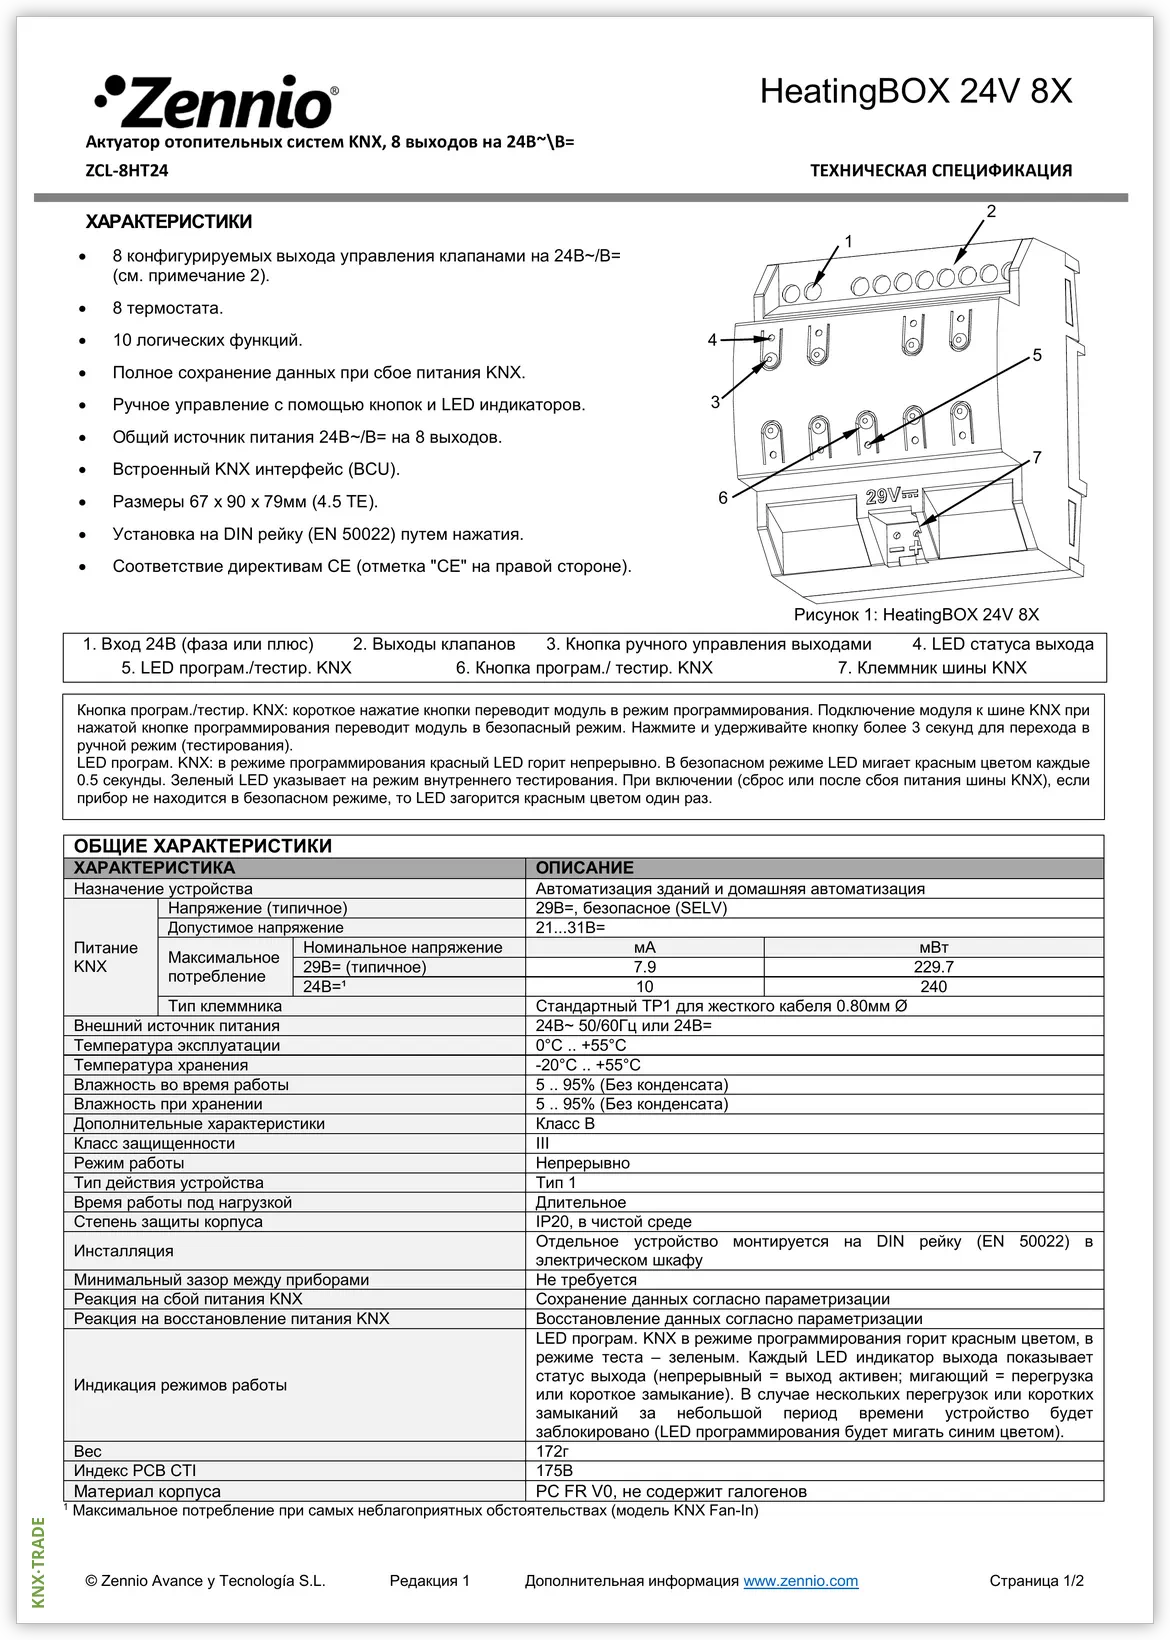 Datasheet (1) Zennio [ZCL-8HT24] HeatingBOX 24V 8X / Контроллер отопления KNX, 8 каналов, 24 VAC/DC